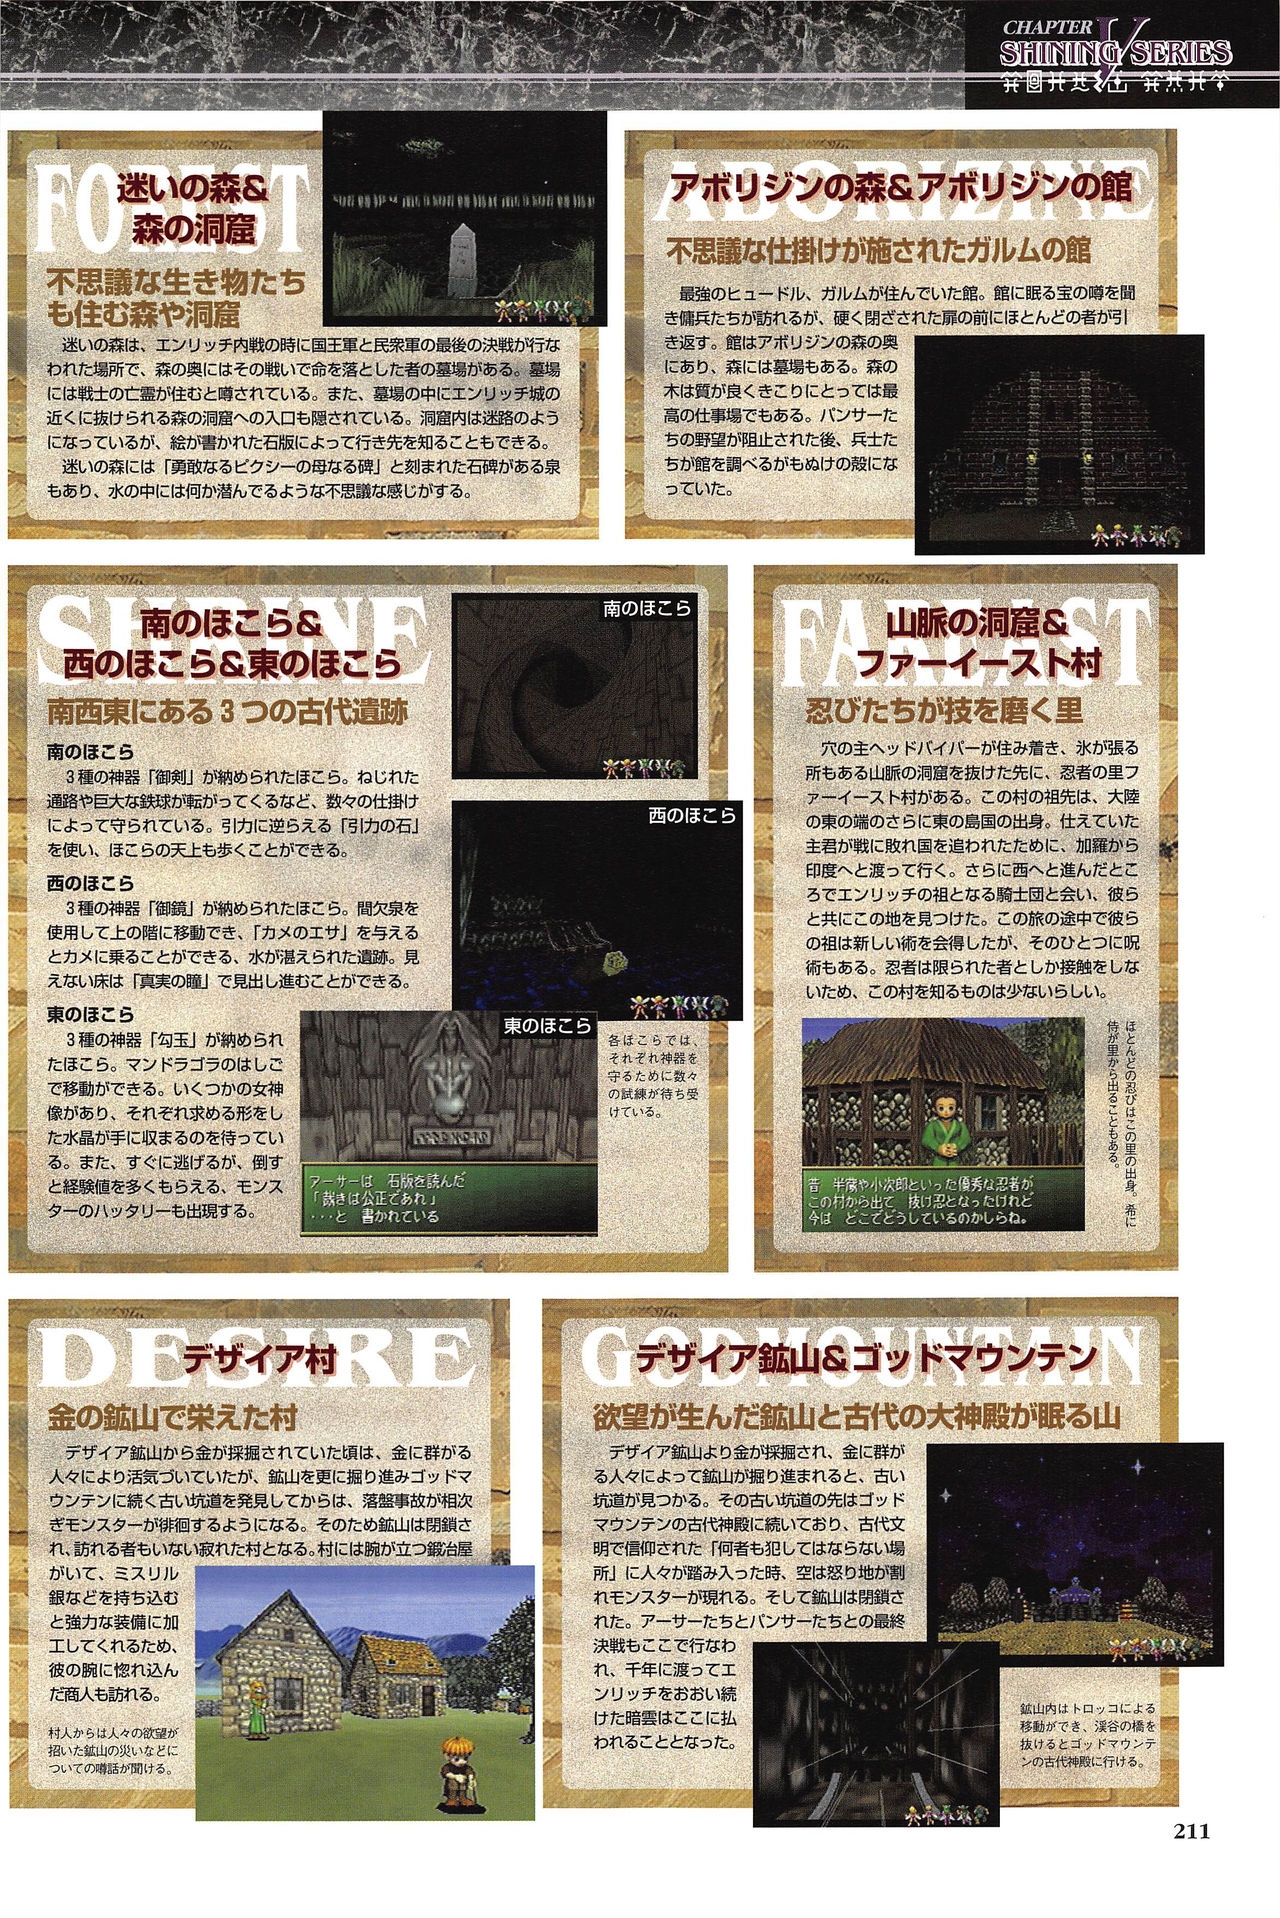 [Kajiyama  Hiroshi] Shining Force III Official Setting Collection Artbook 216